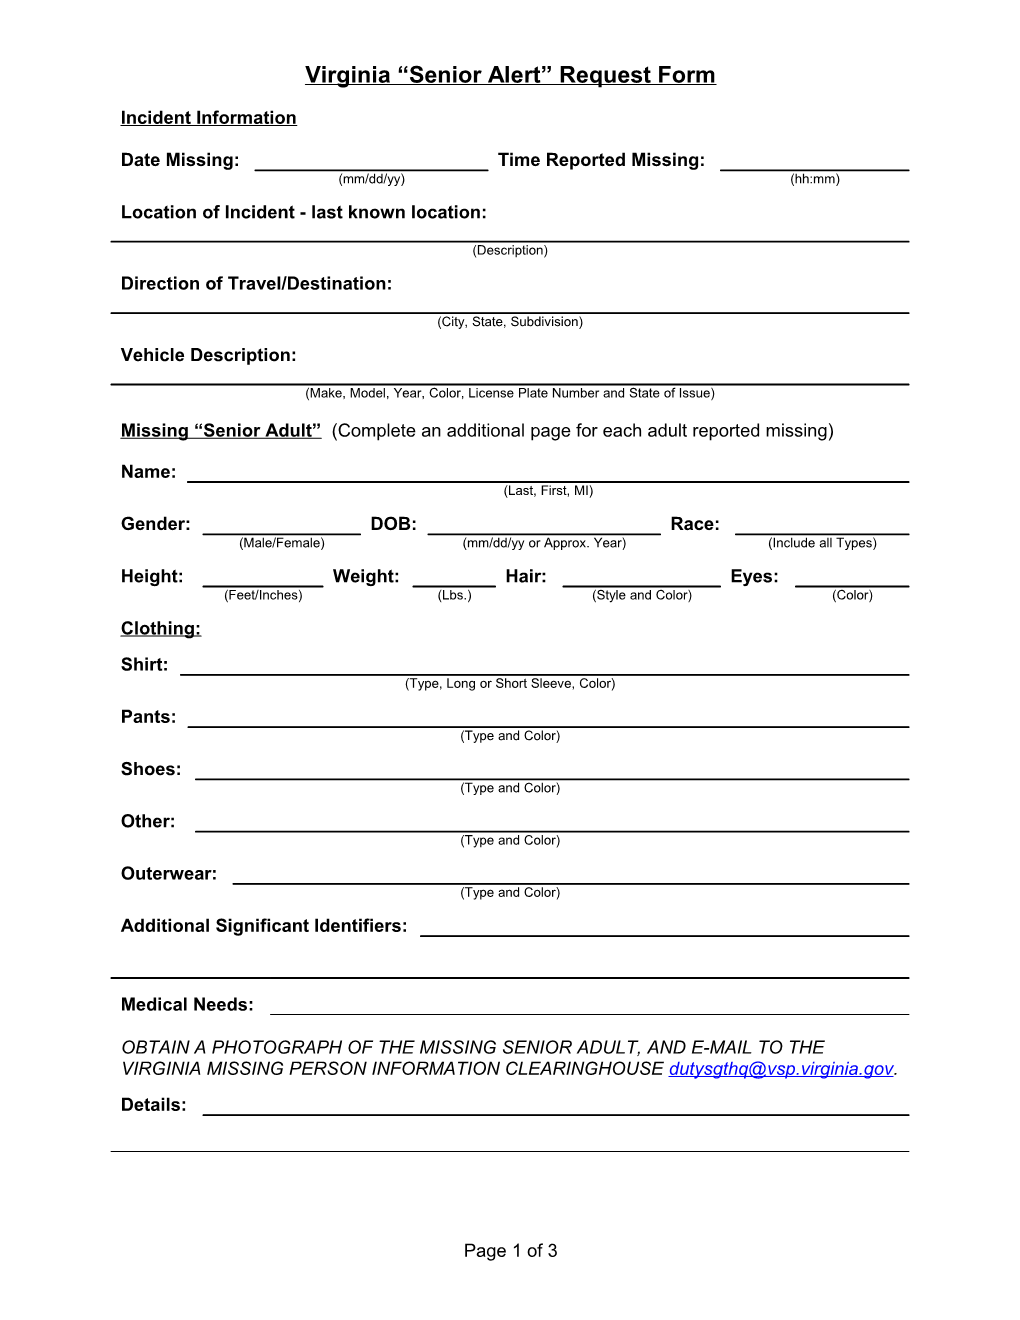 Virginia Senior Alert Form